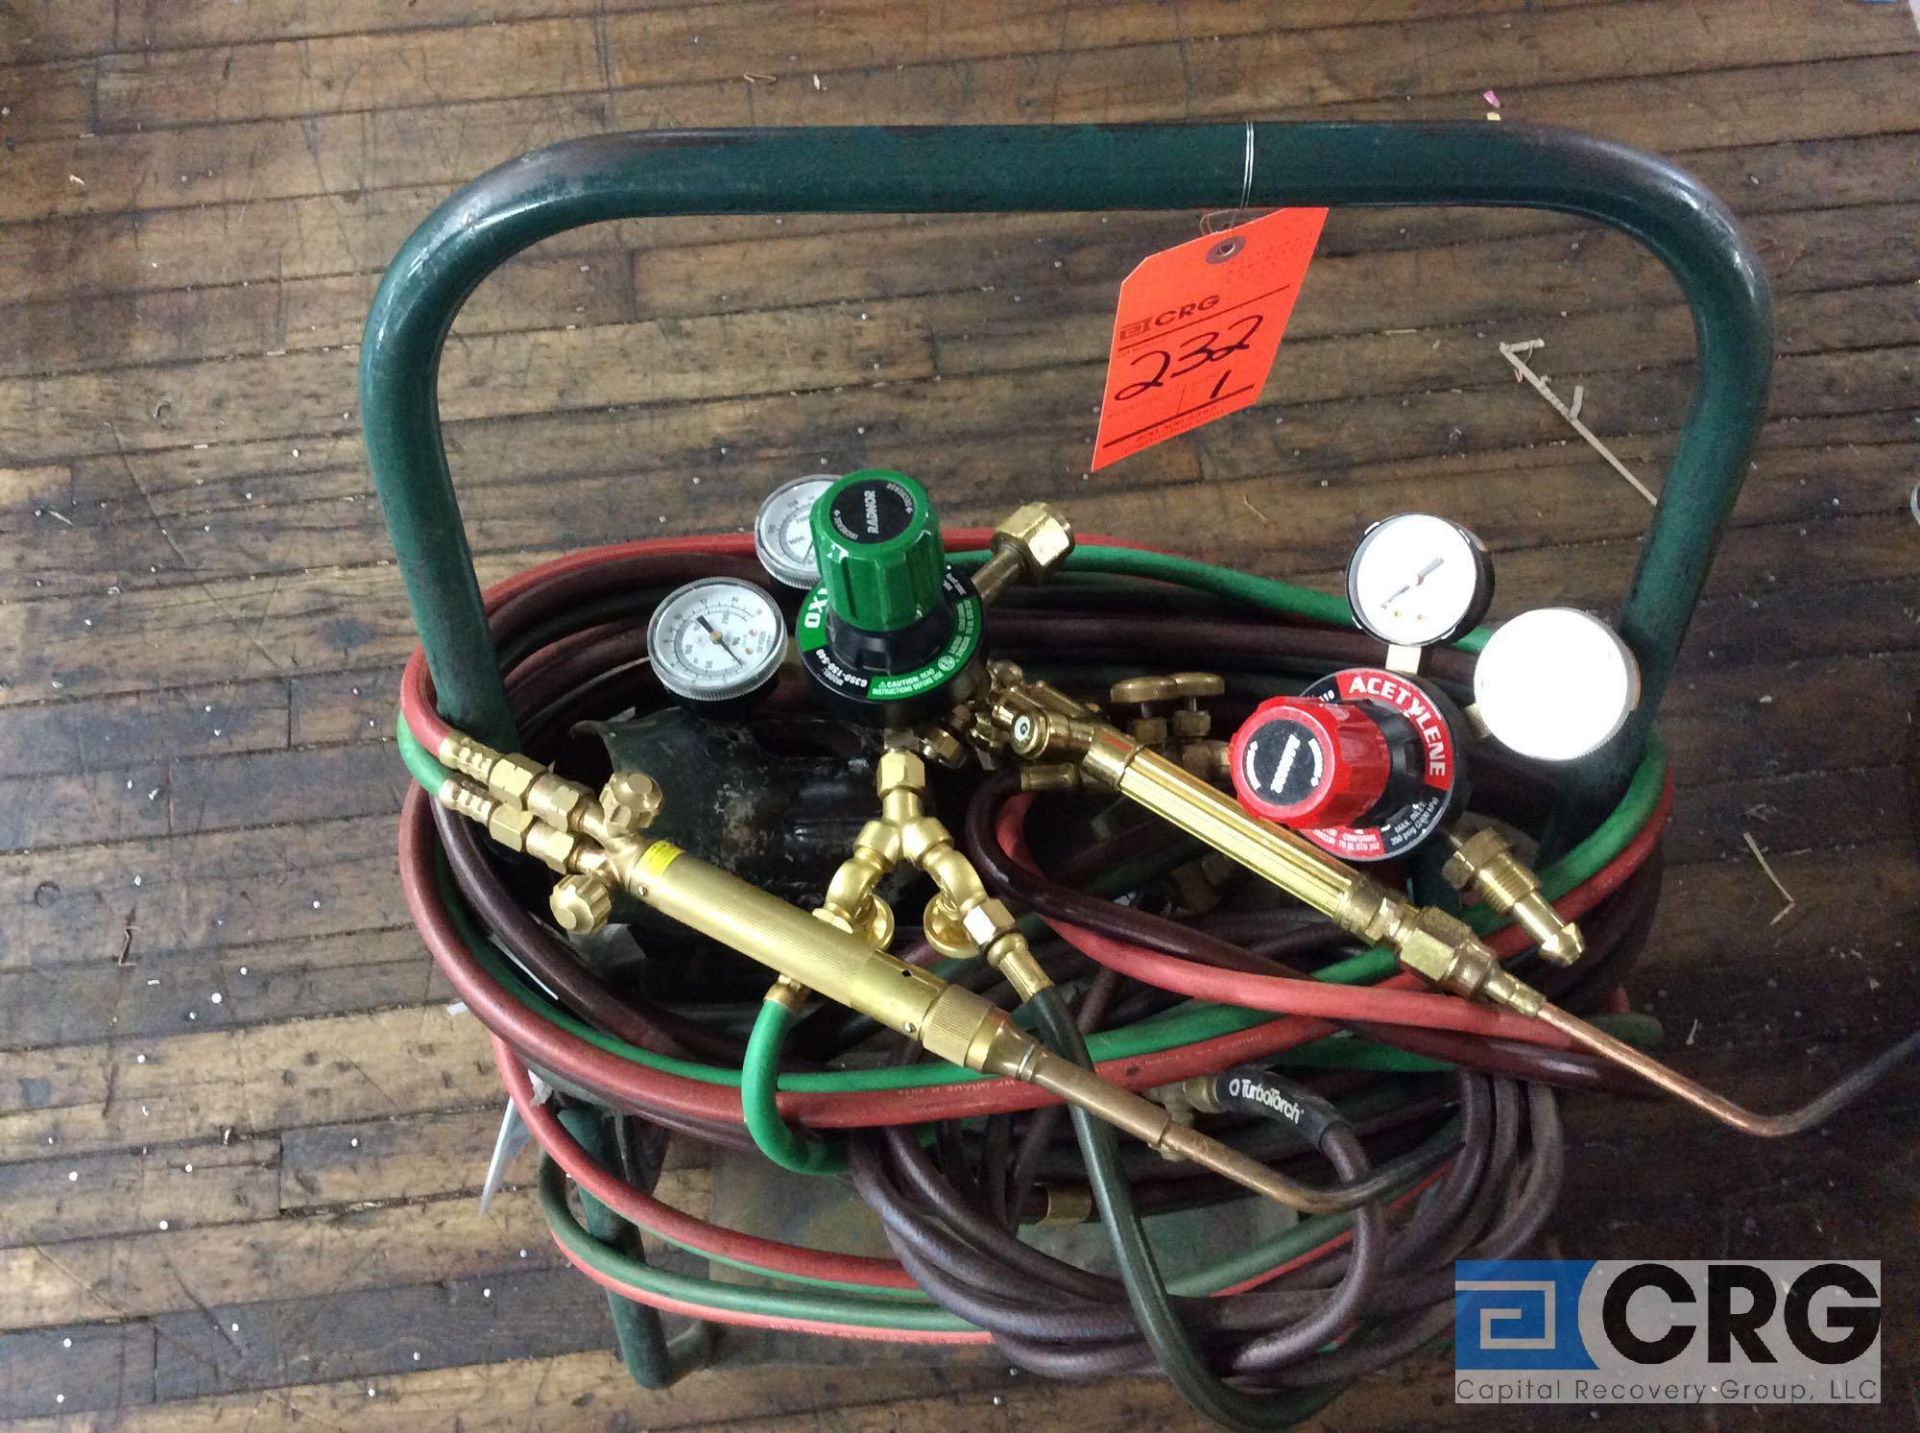 Oxy/Accet welding cart with regulator, hose and welding gun - Image 2 of 2